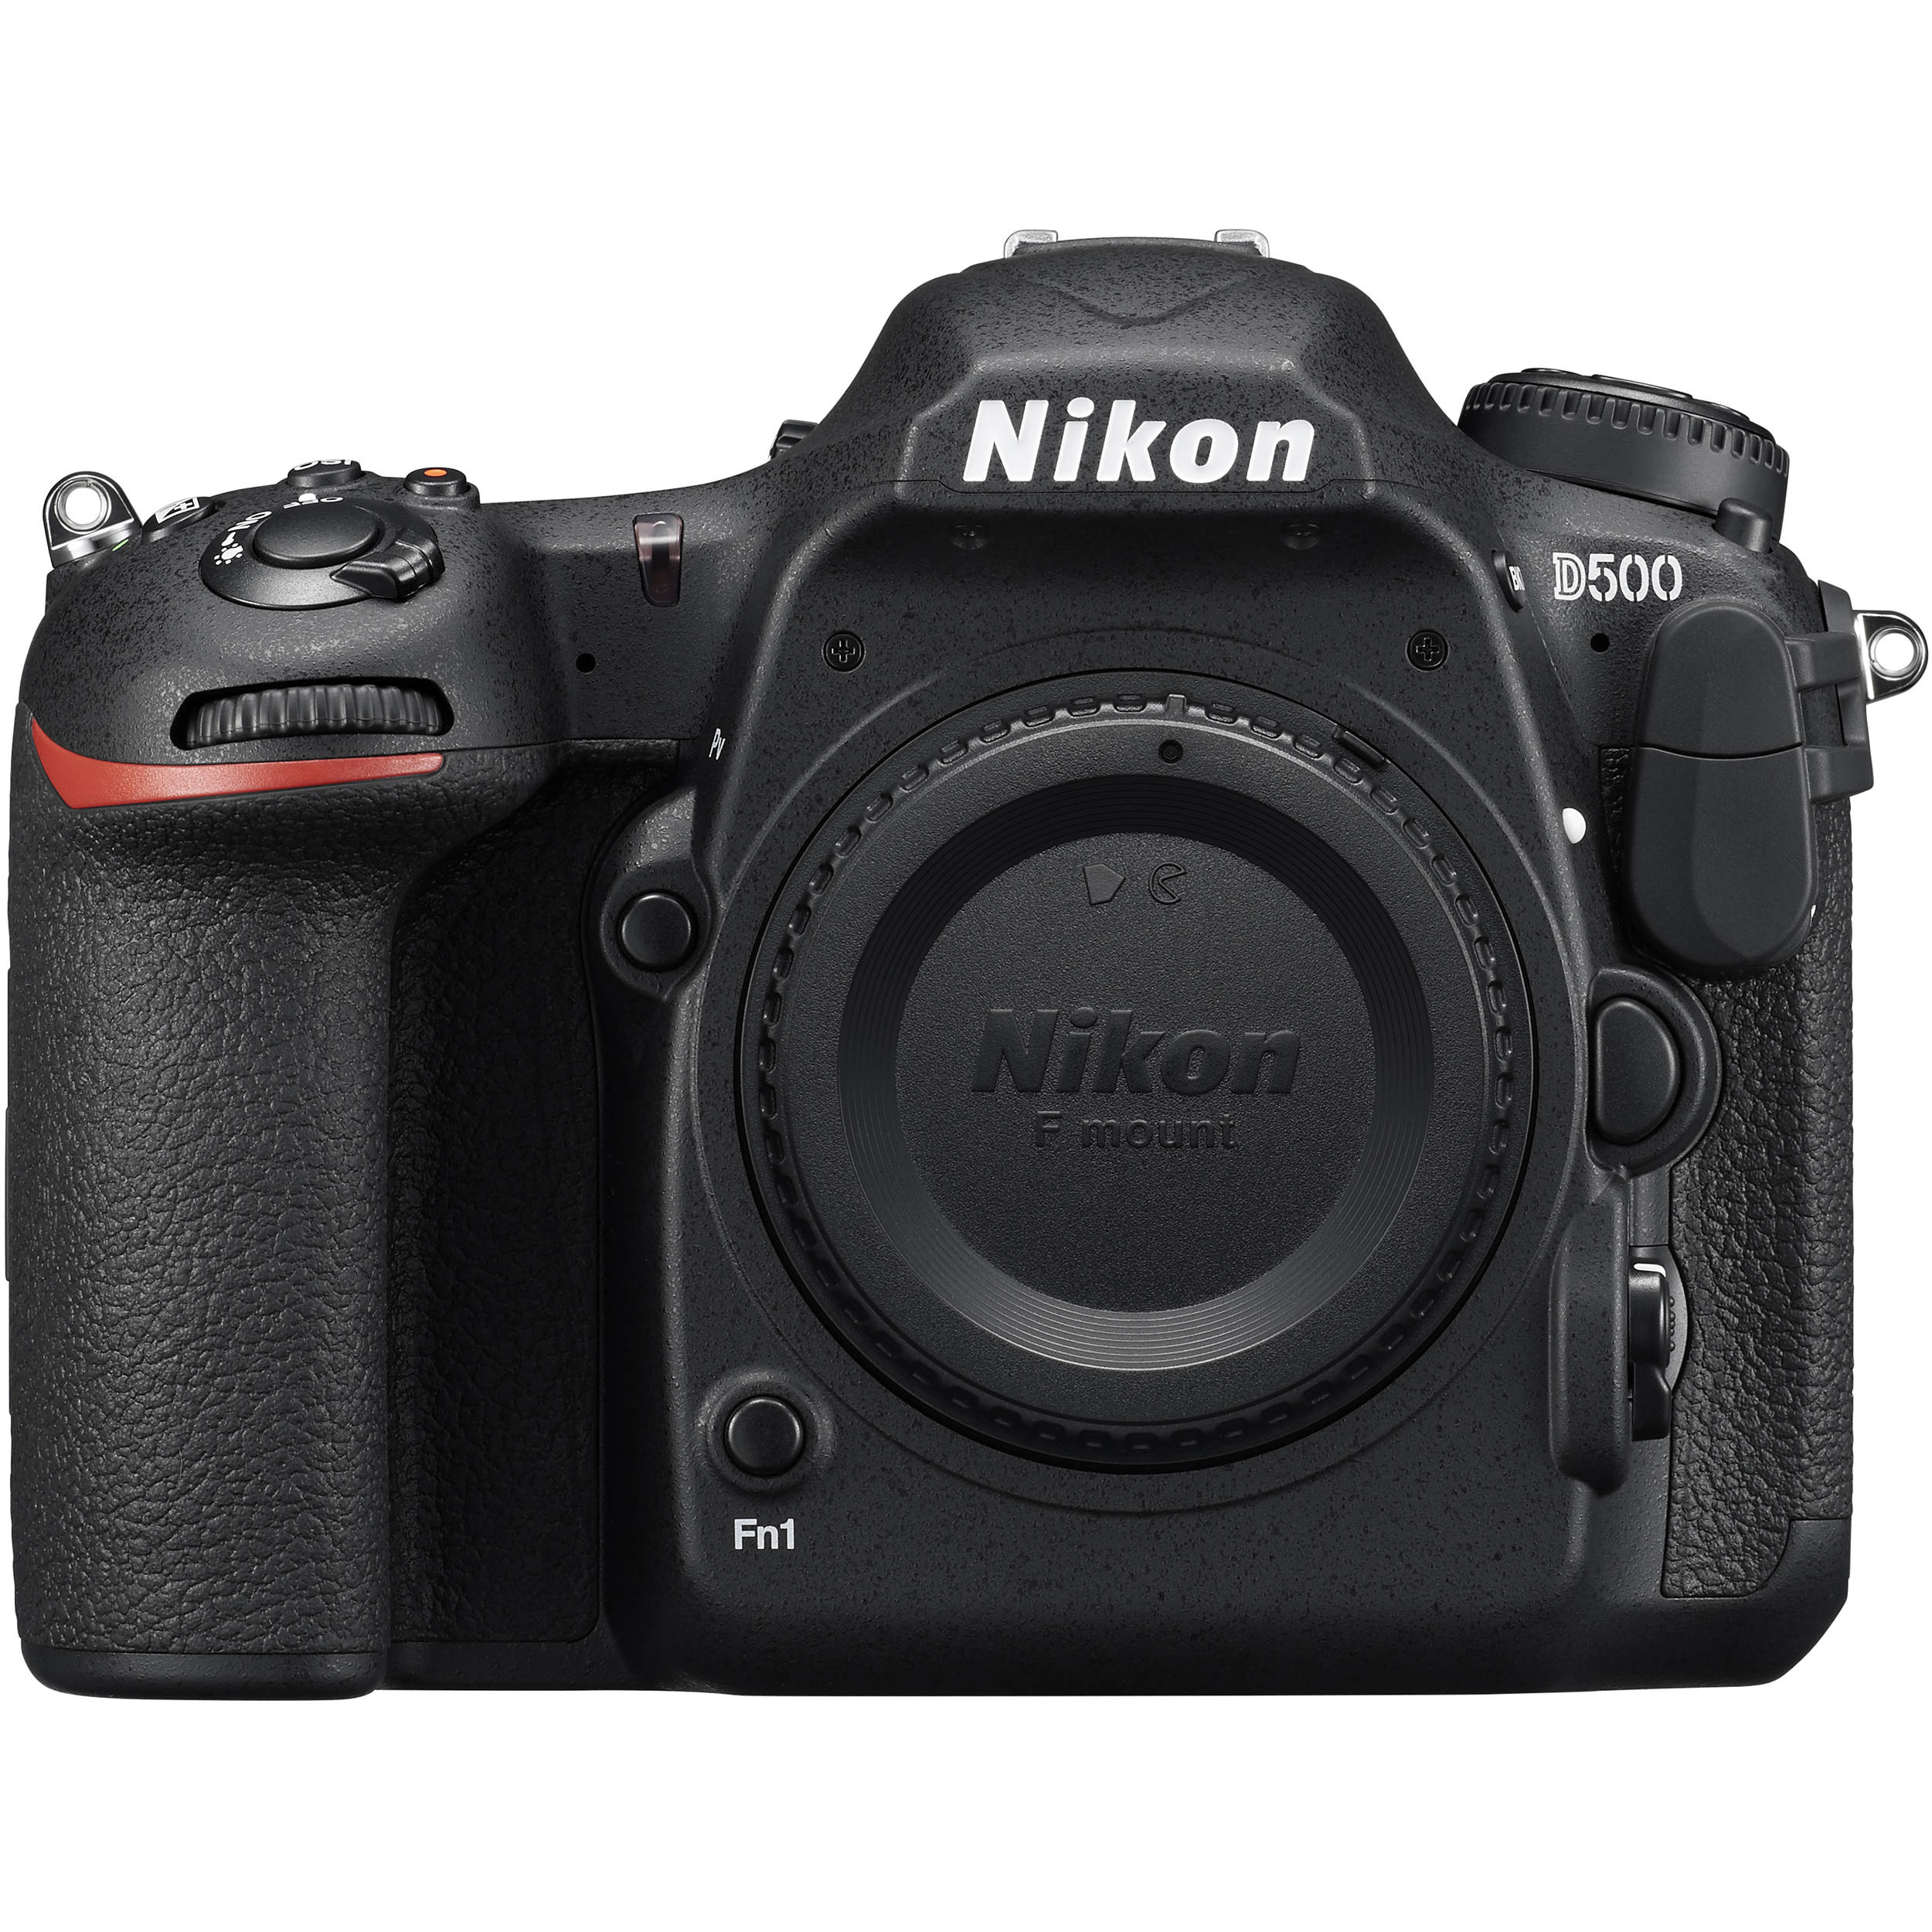 Nikon D500 (OCCASION GRADE A)